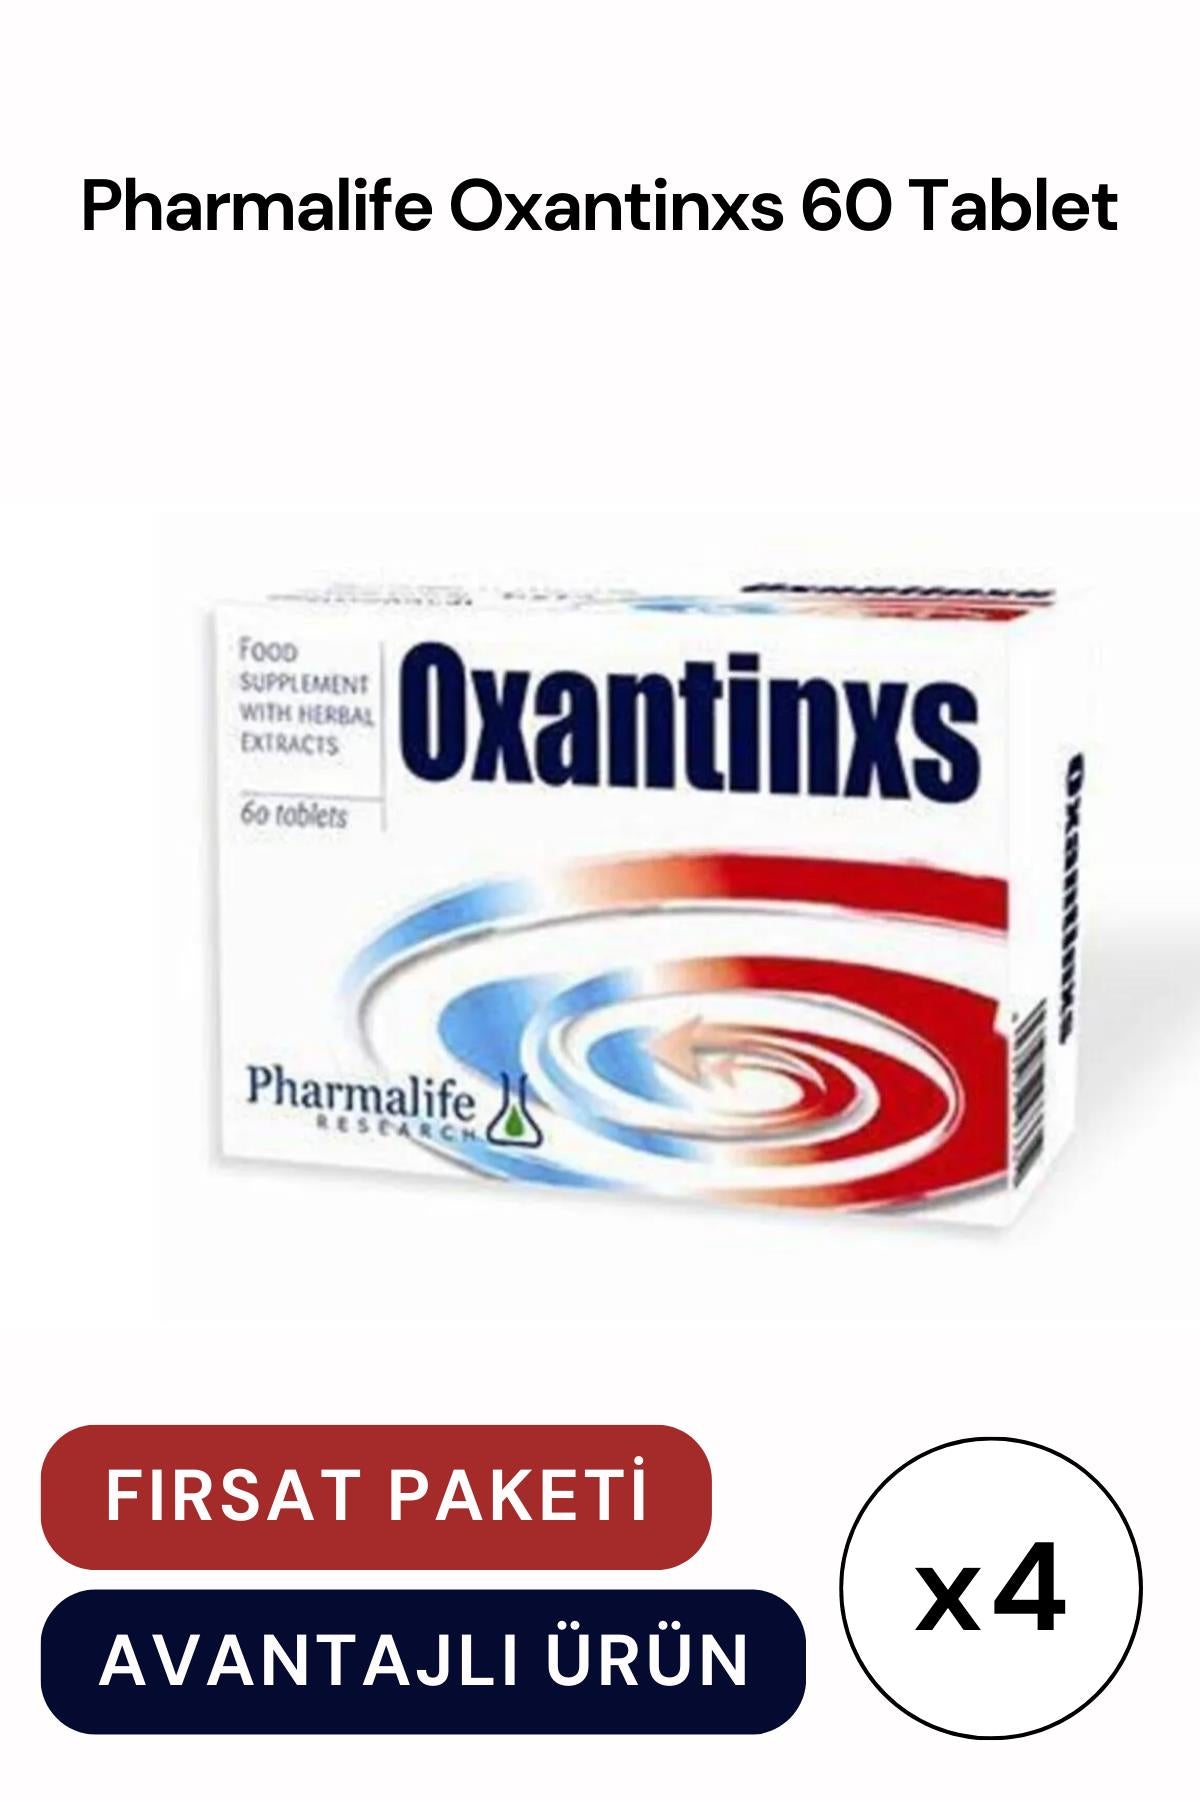 Pharmalife Oxantinxs 60 Tablet 4'lü Paket